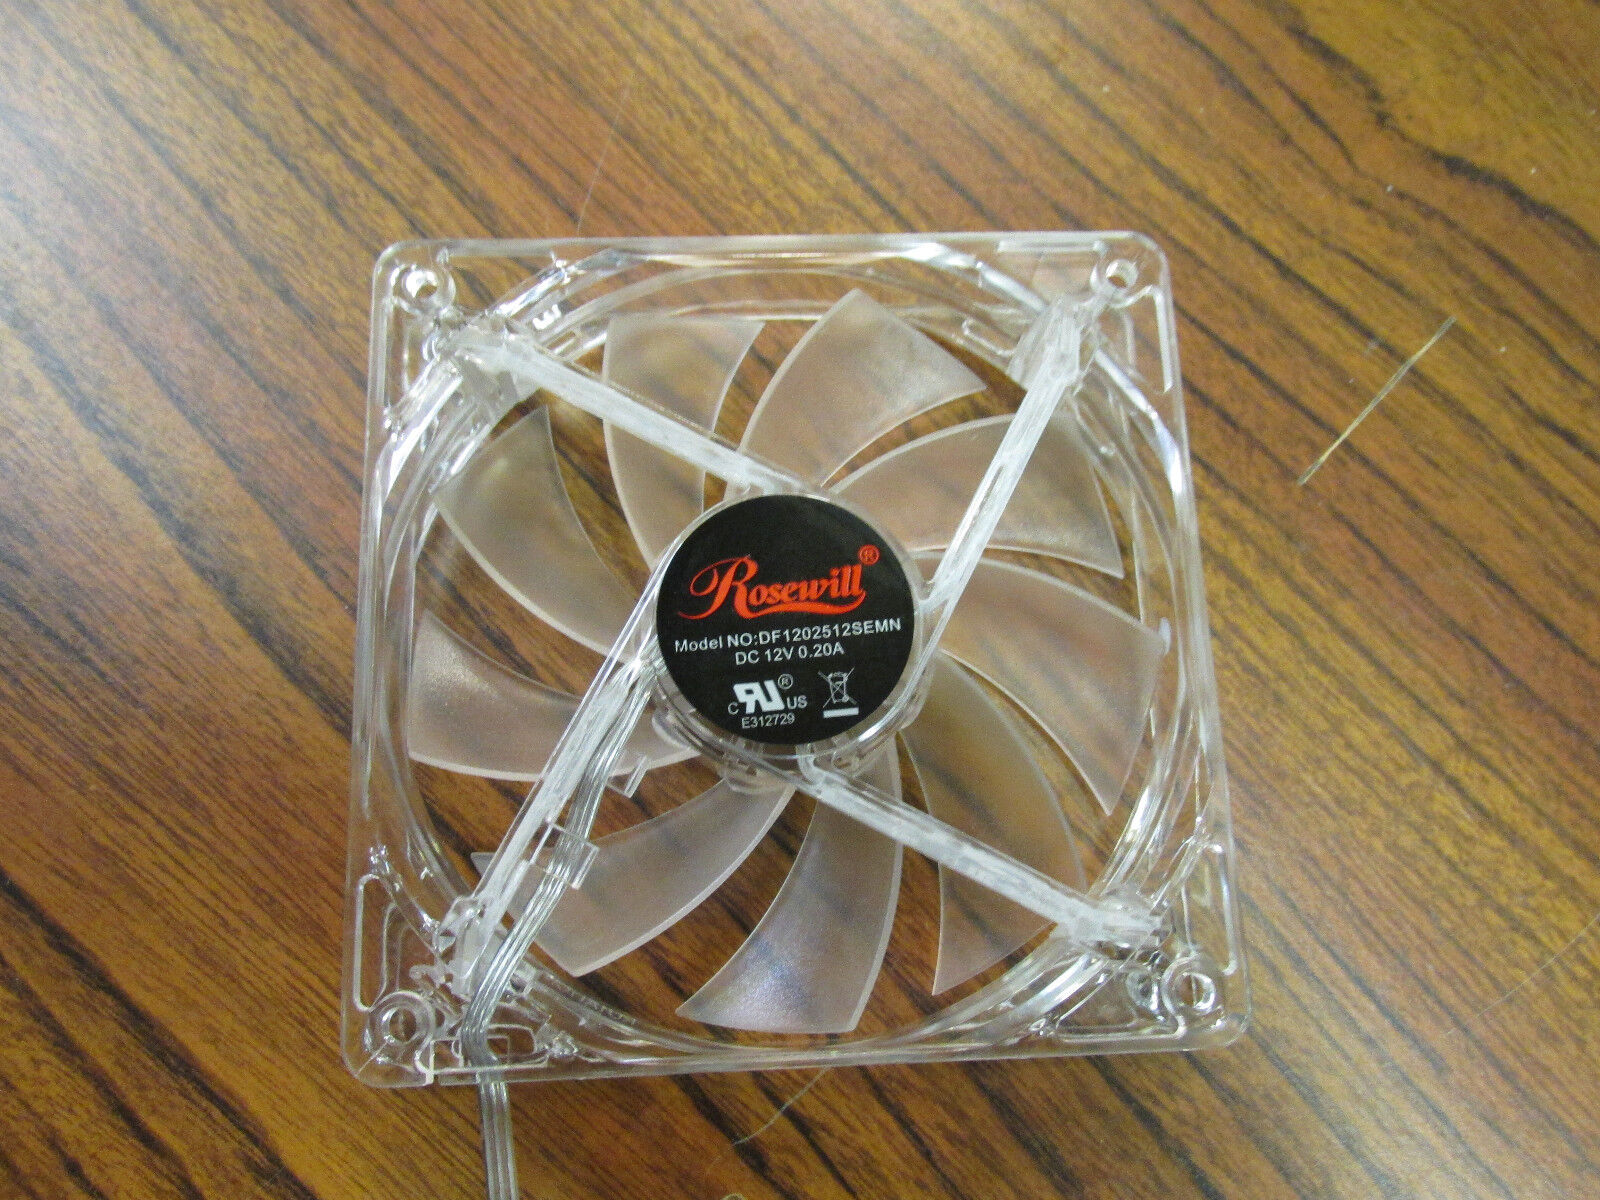 Rosewill 120mm Computer Case Fan